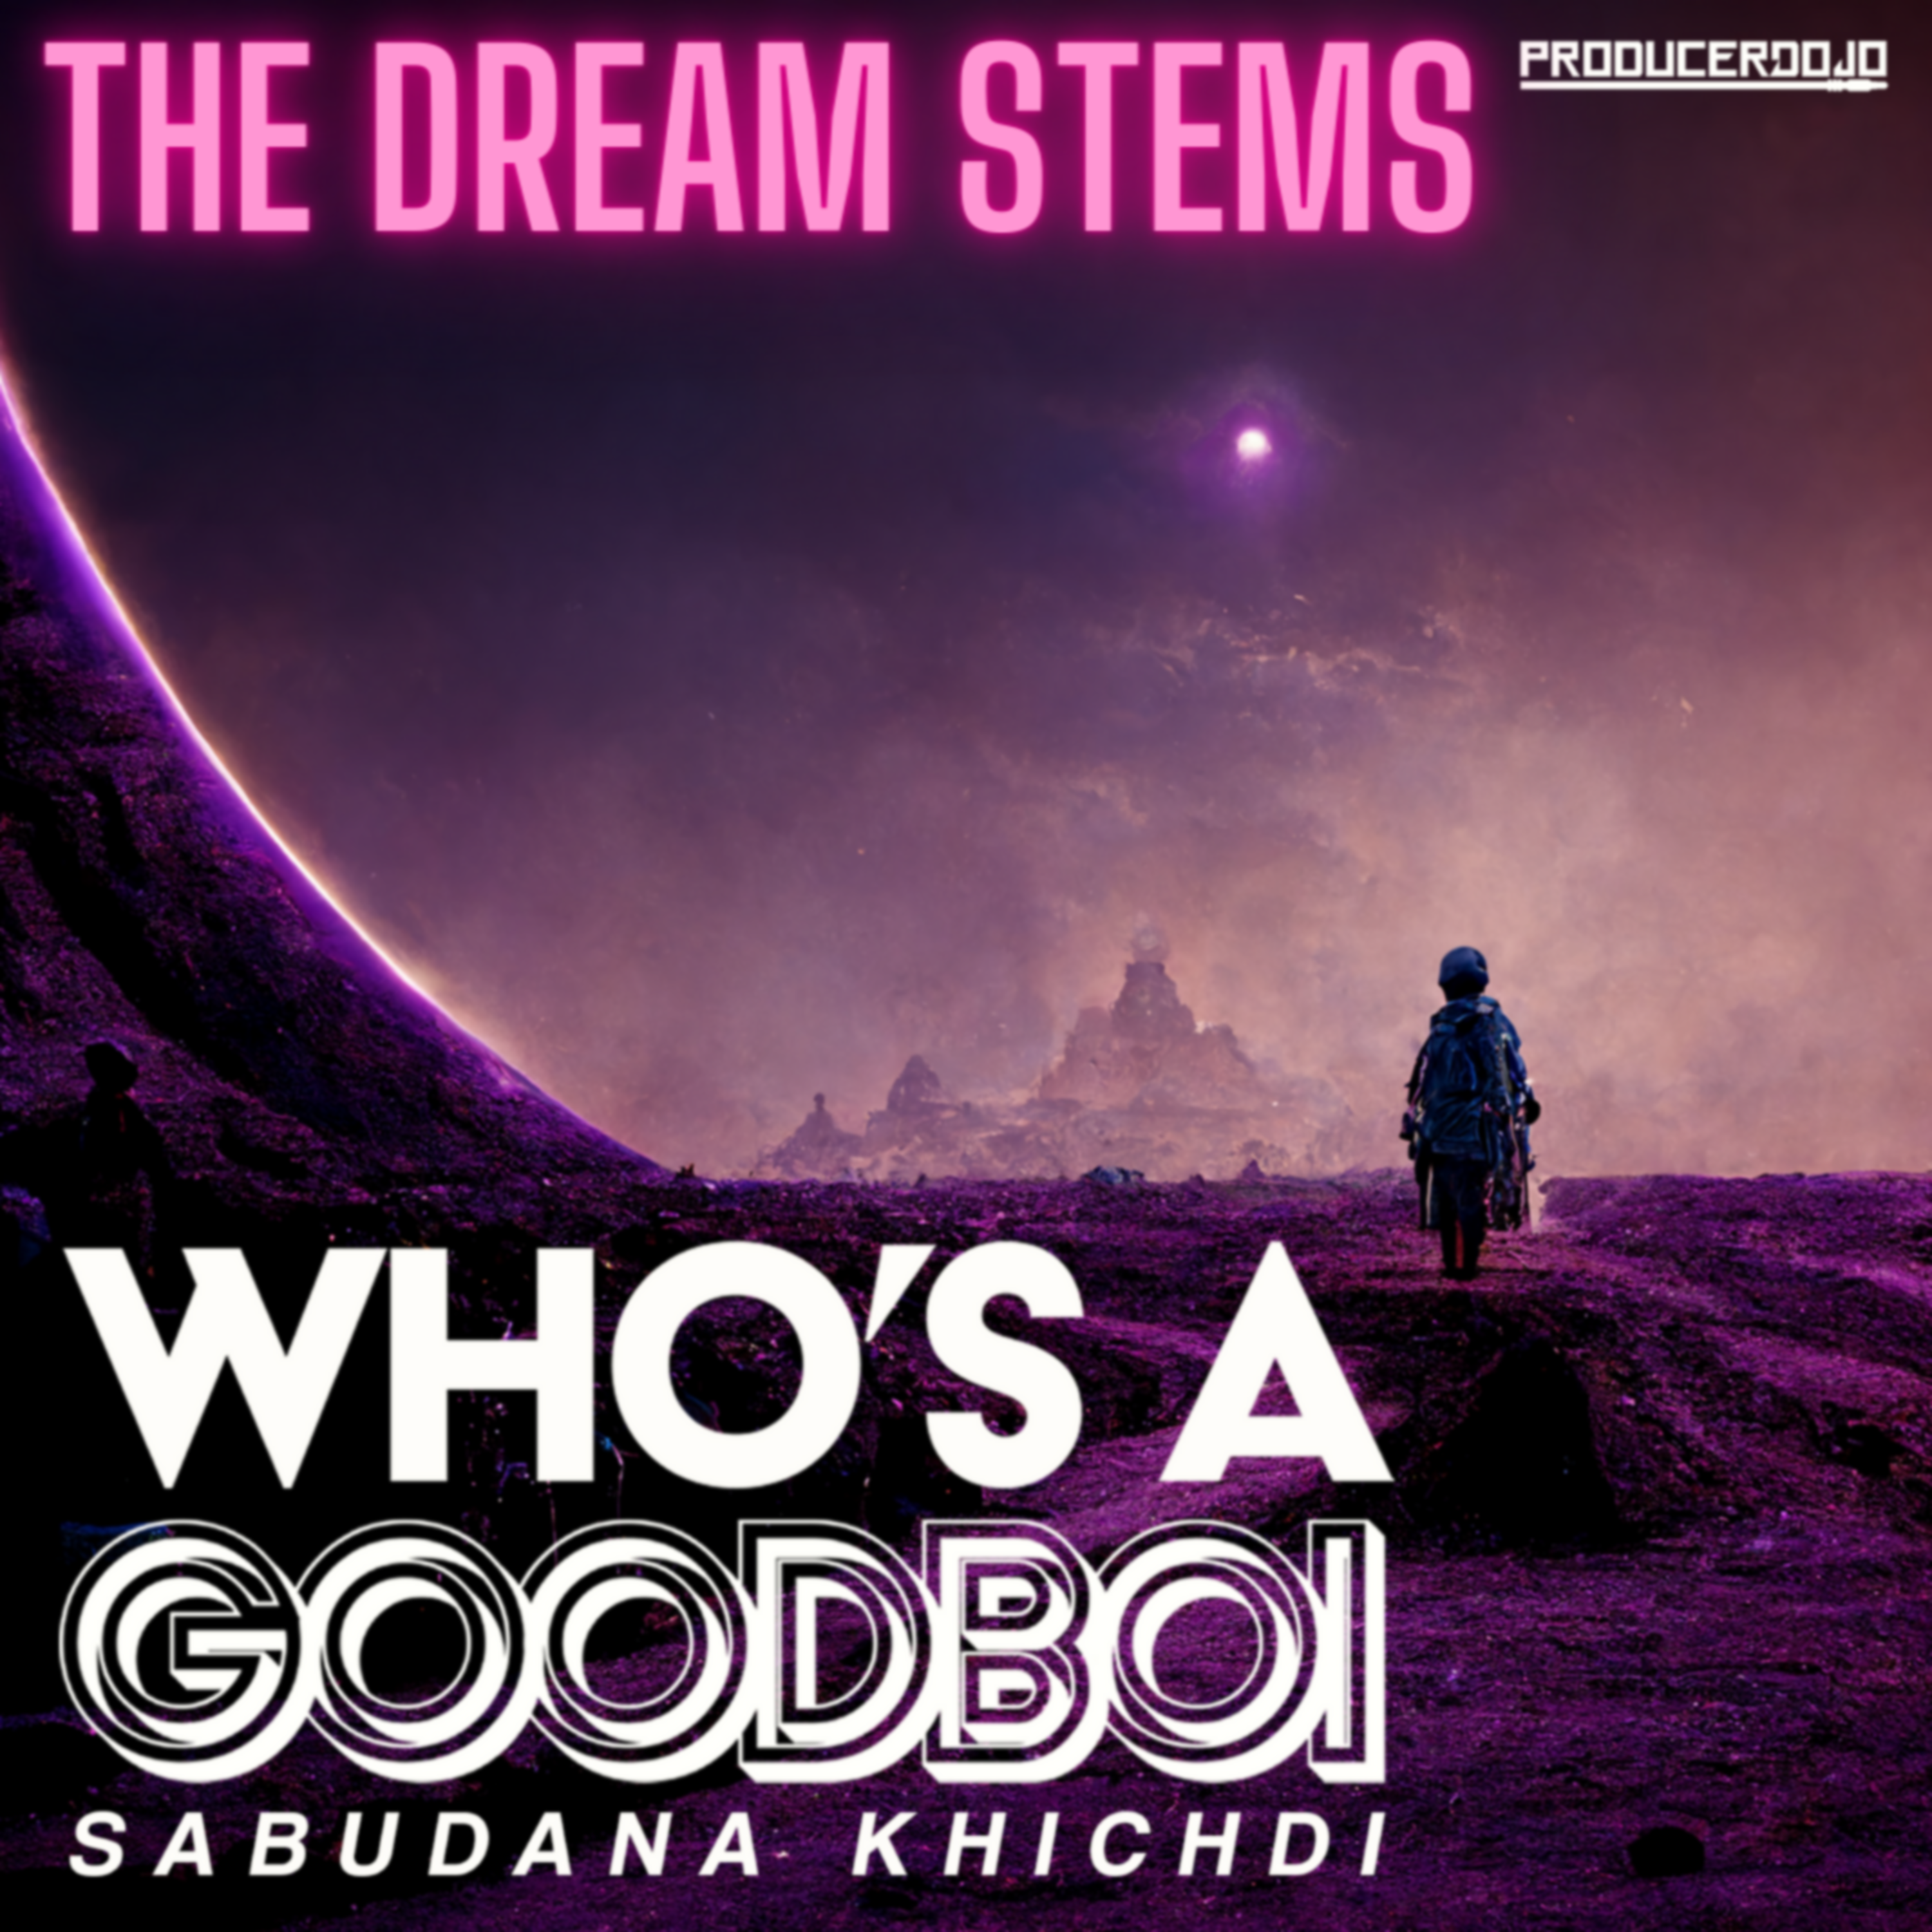 Who’s A GoodBoi Stems - The Dream